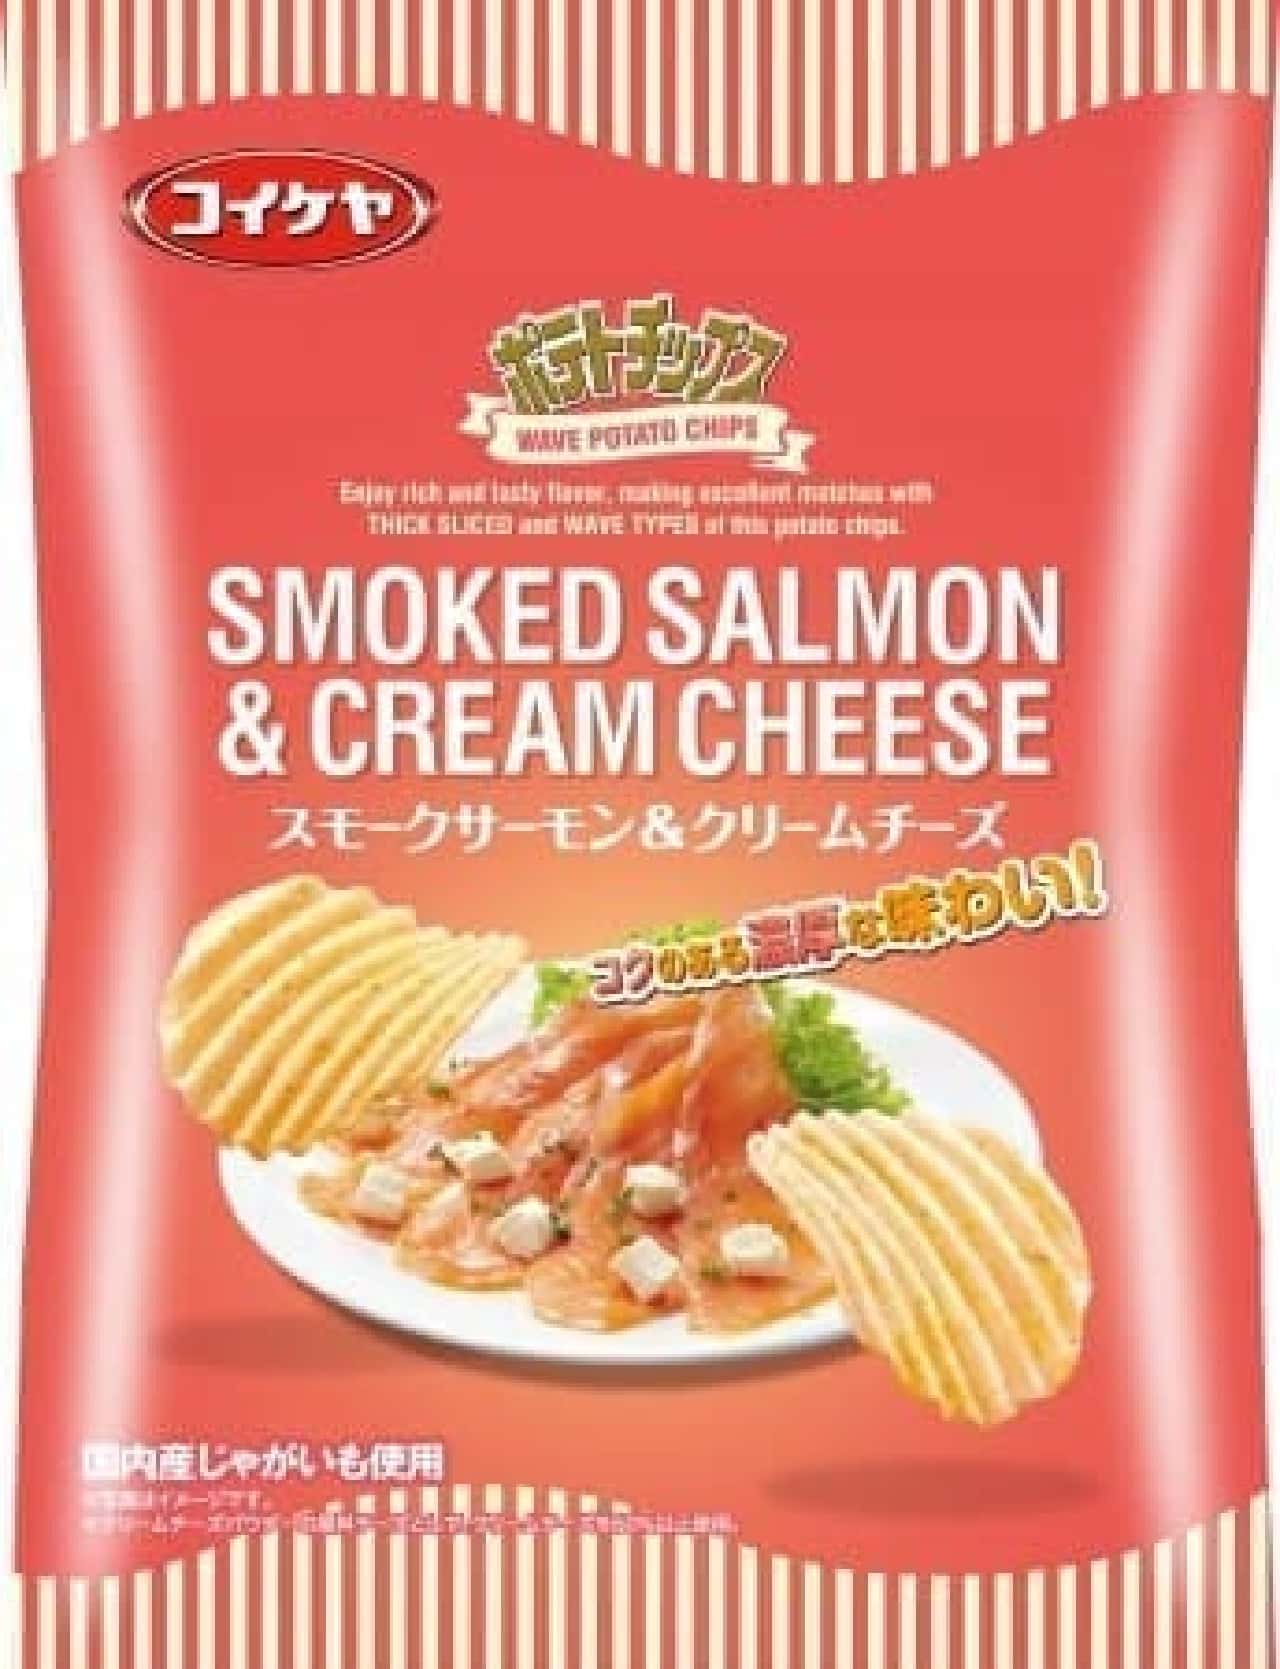 "Potato Chips Smoked Salmon & Cream Cheese Wave Type"